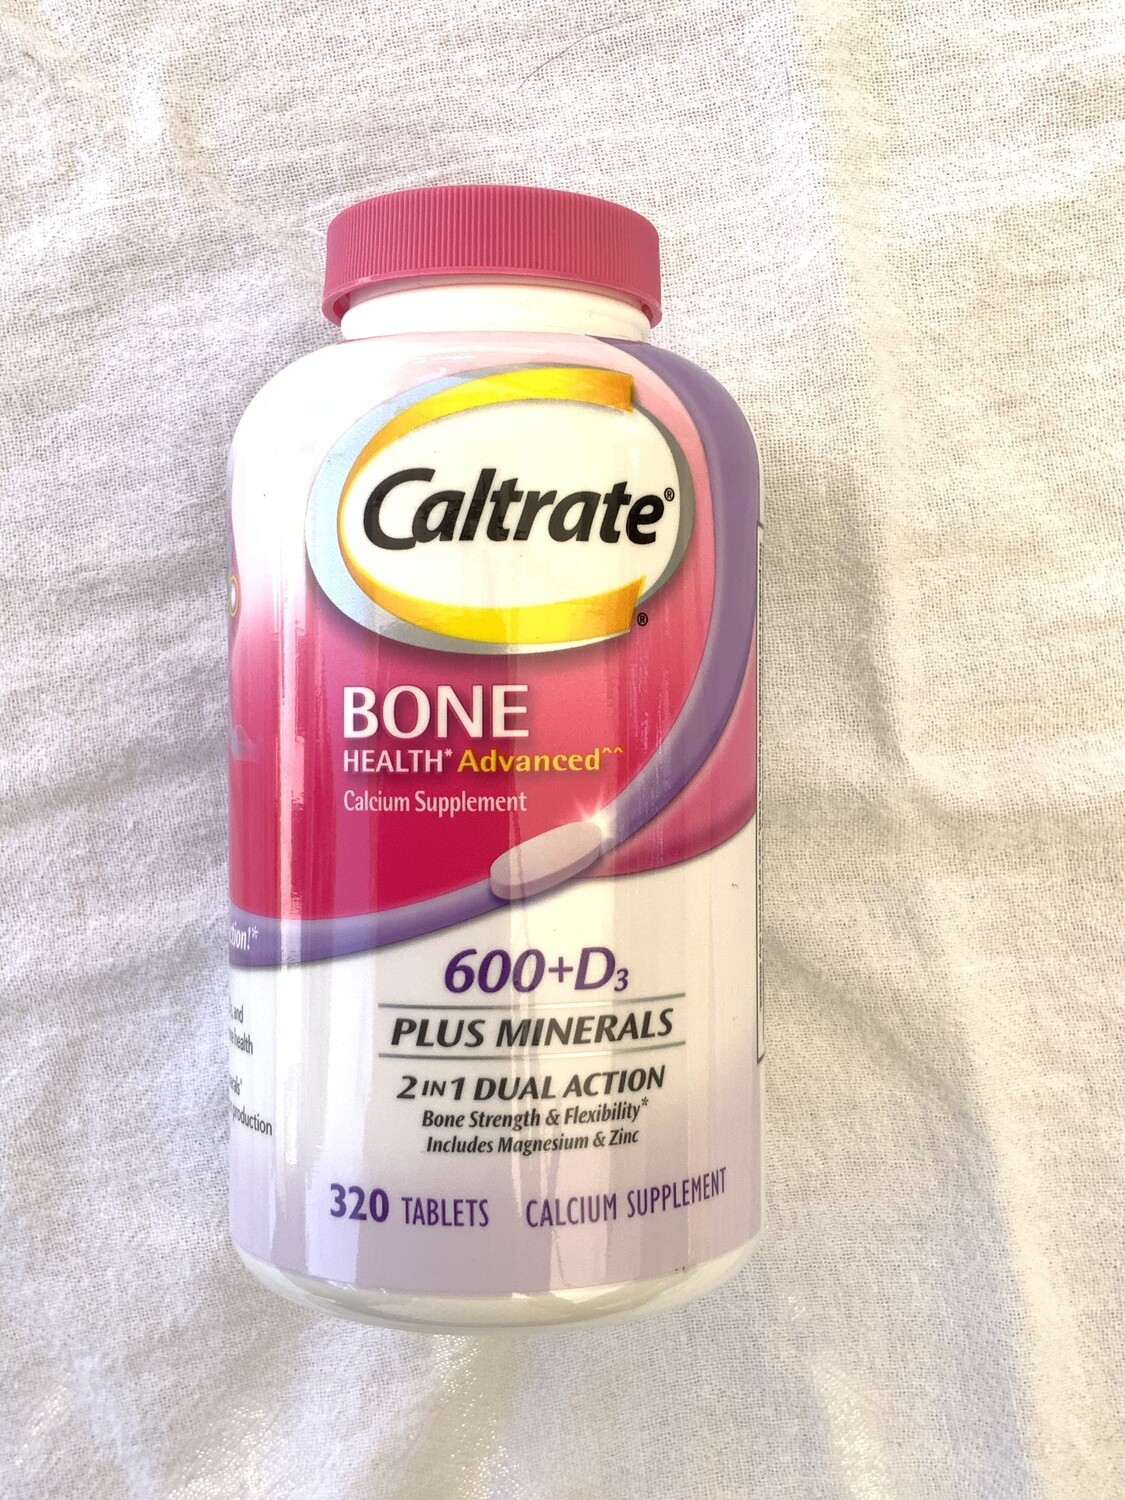 Caltrate Bone Health Advanced Calcium Supplement